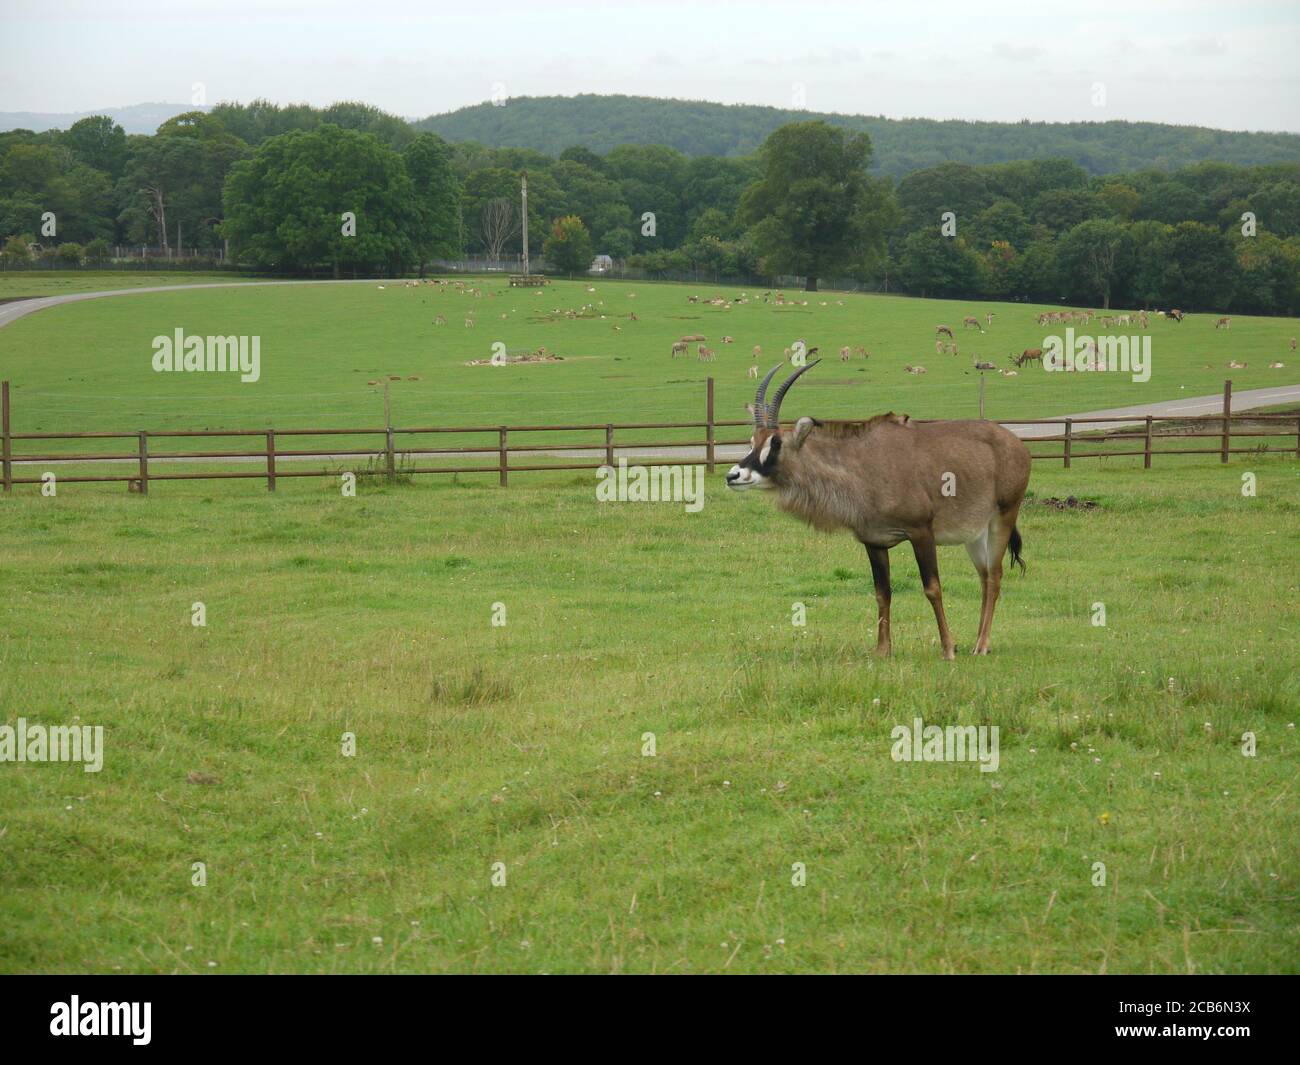 Deer-Like Mammal in a Drive-Through Safari Stock Photo